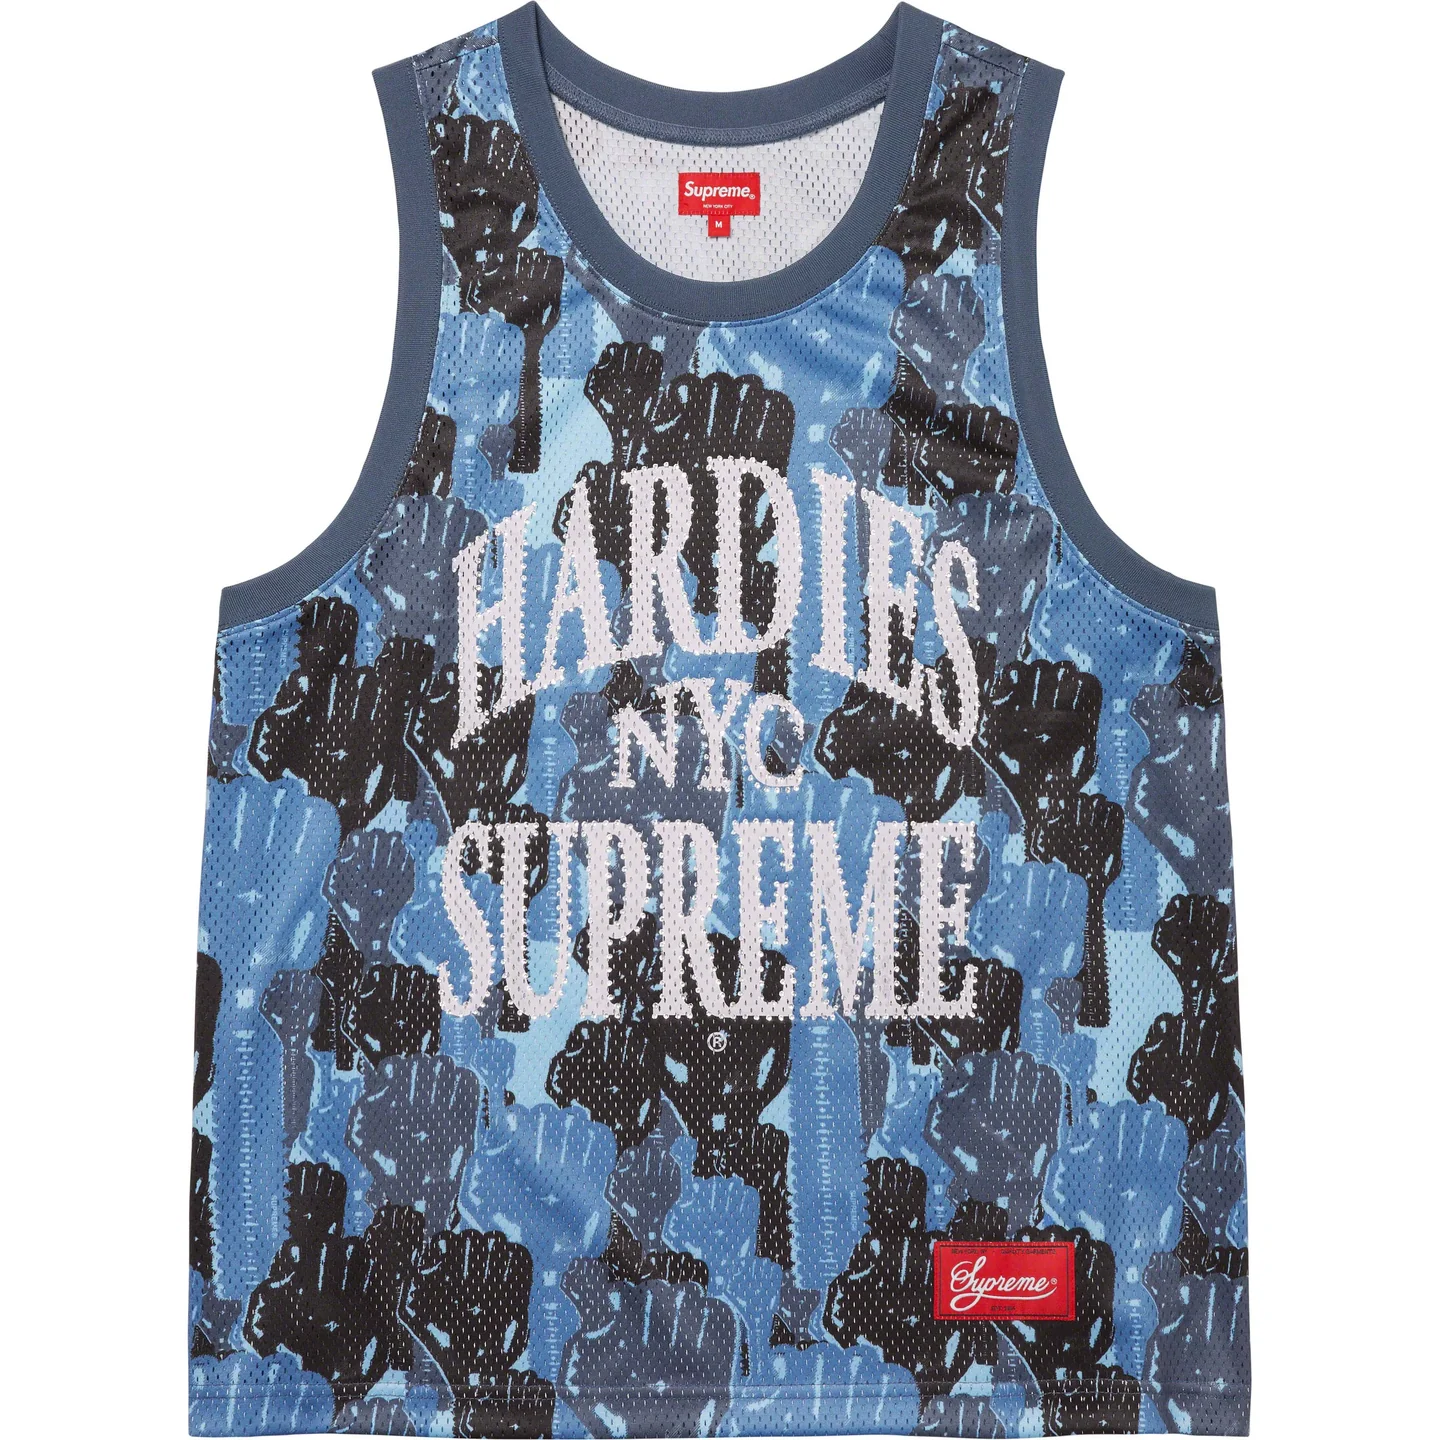 Supreme/Hardies Camo Basketball Jersey